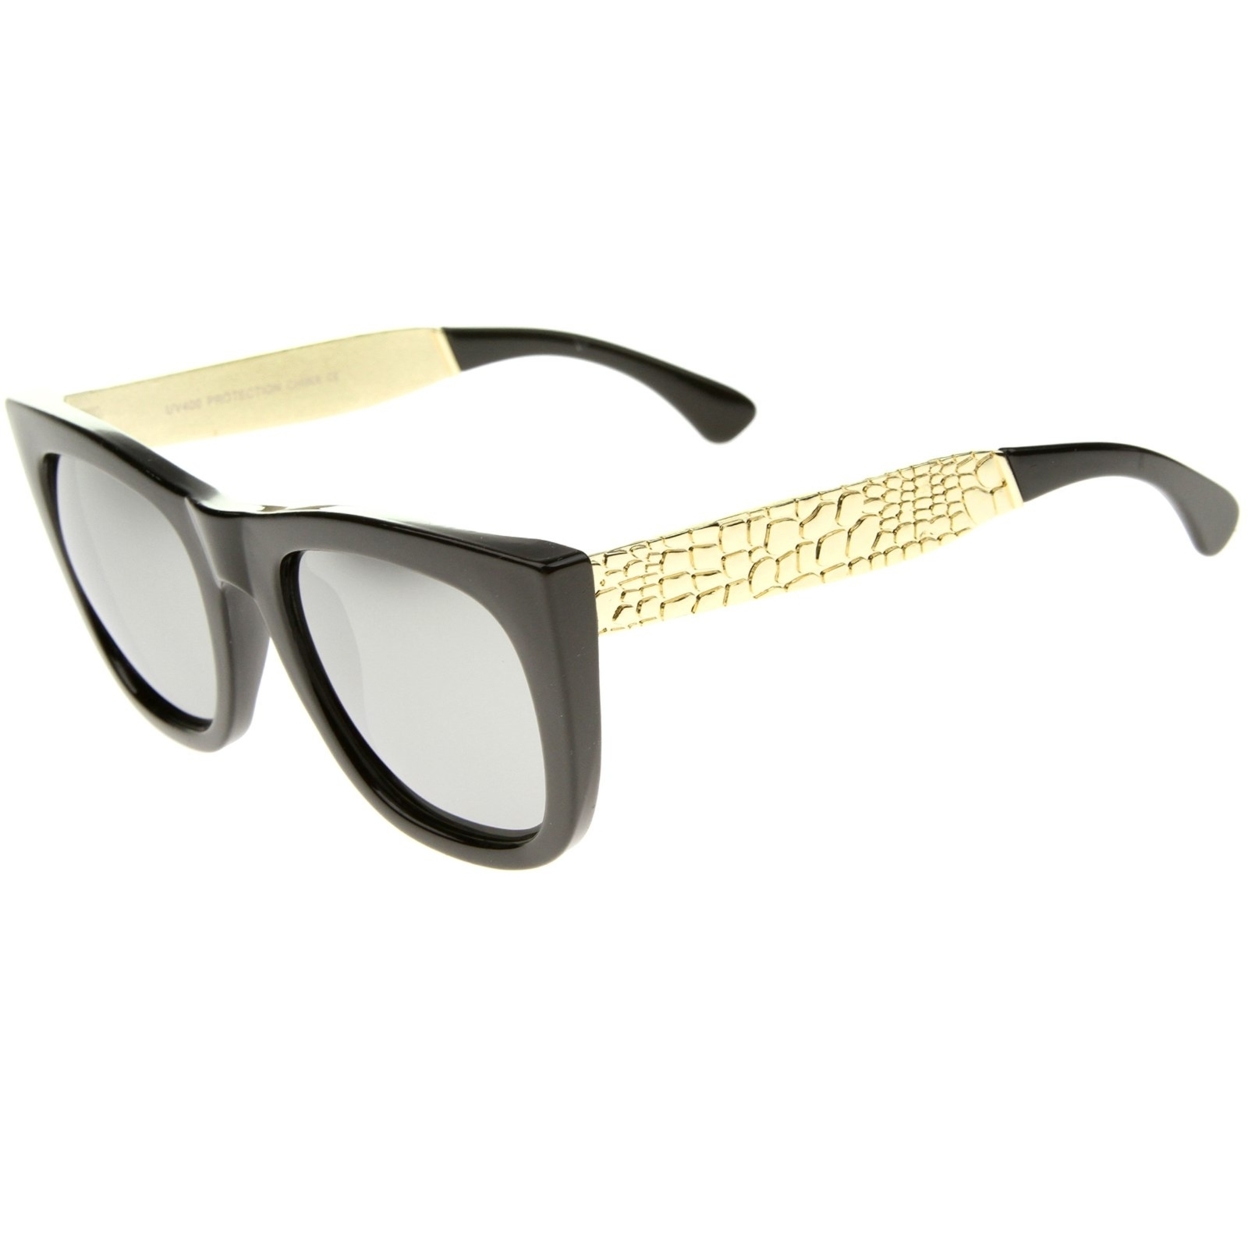 High Fashion Alligator Metal Temple Mirrored Lens Flat Top Sunglasses - Black-Gold / Magenta Mirror